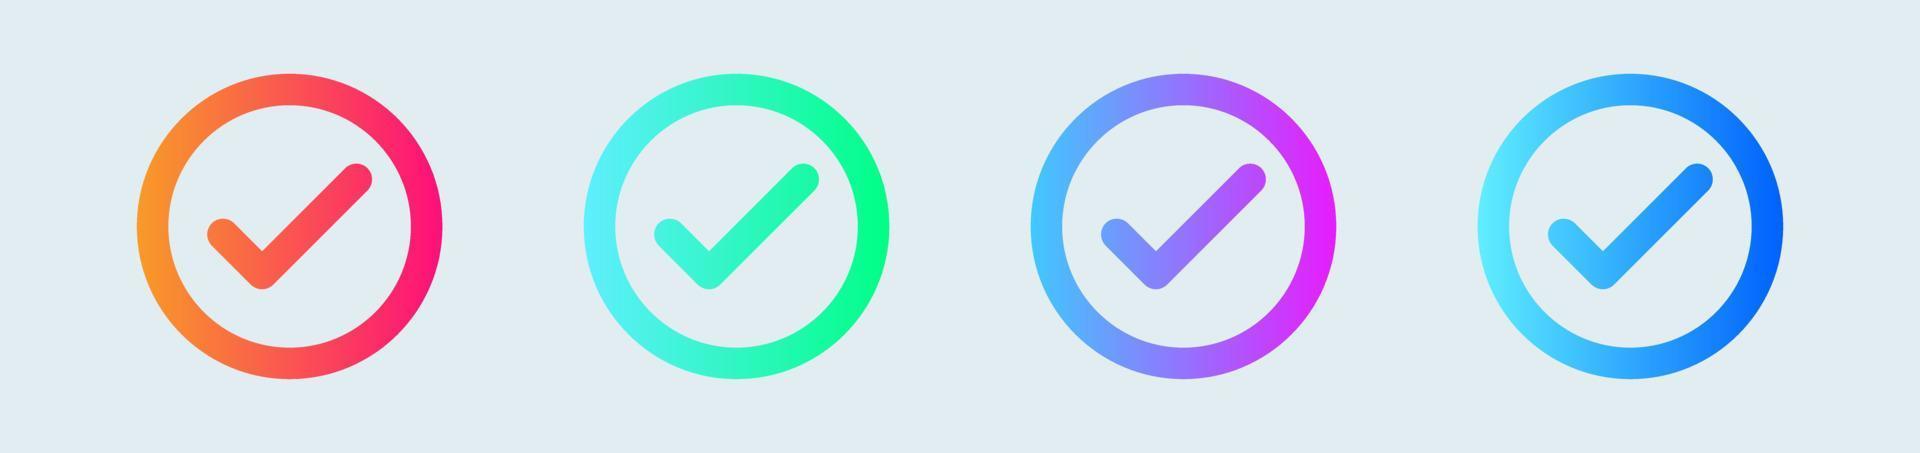 Gradient check mark icon for user interface design. Vector illustration.